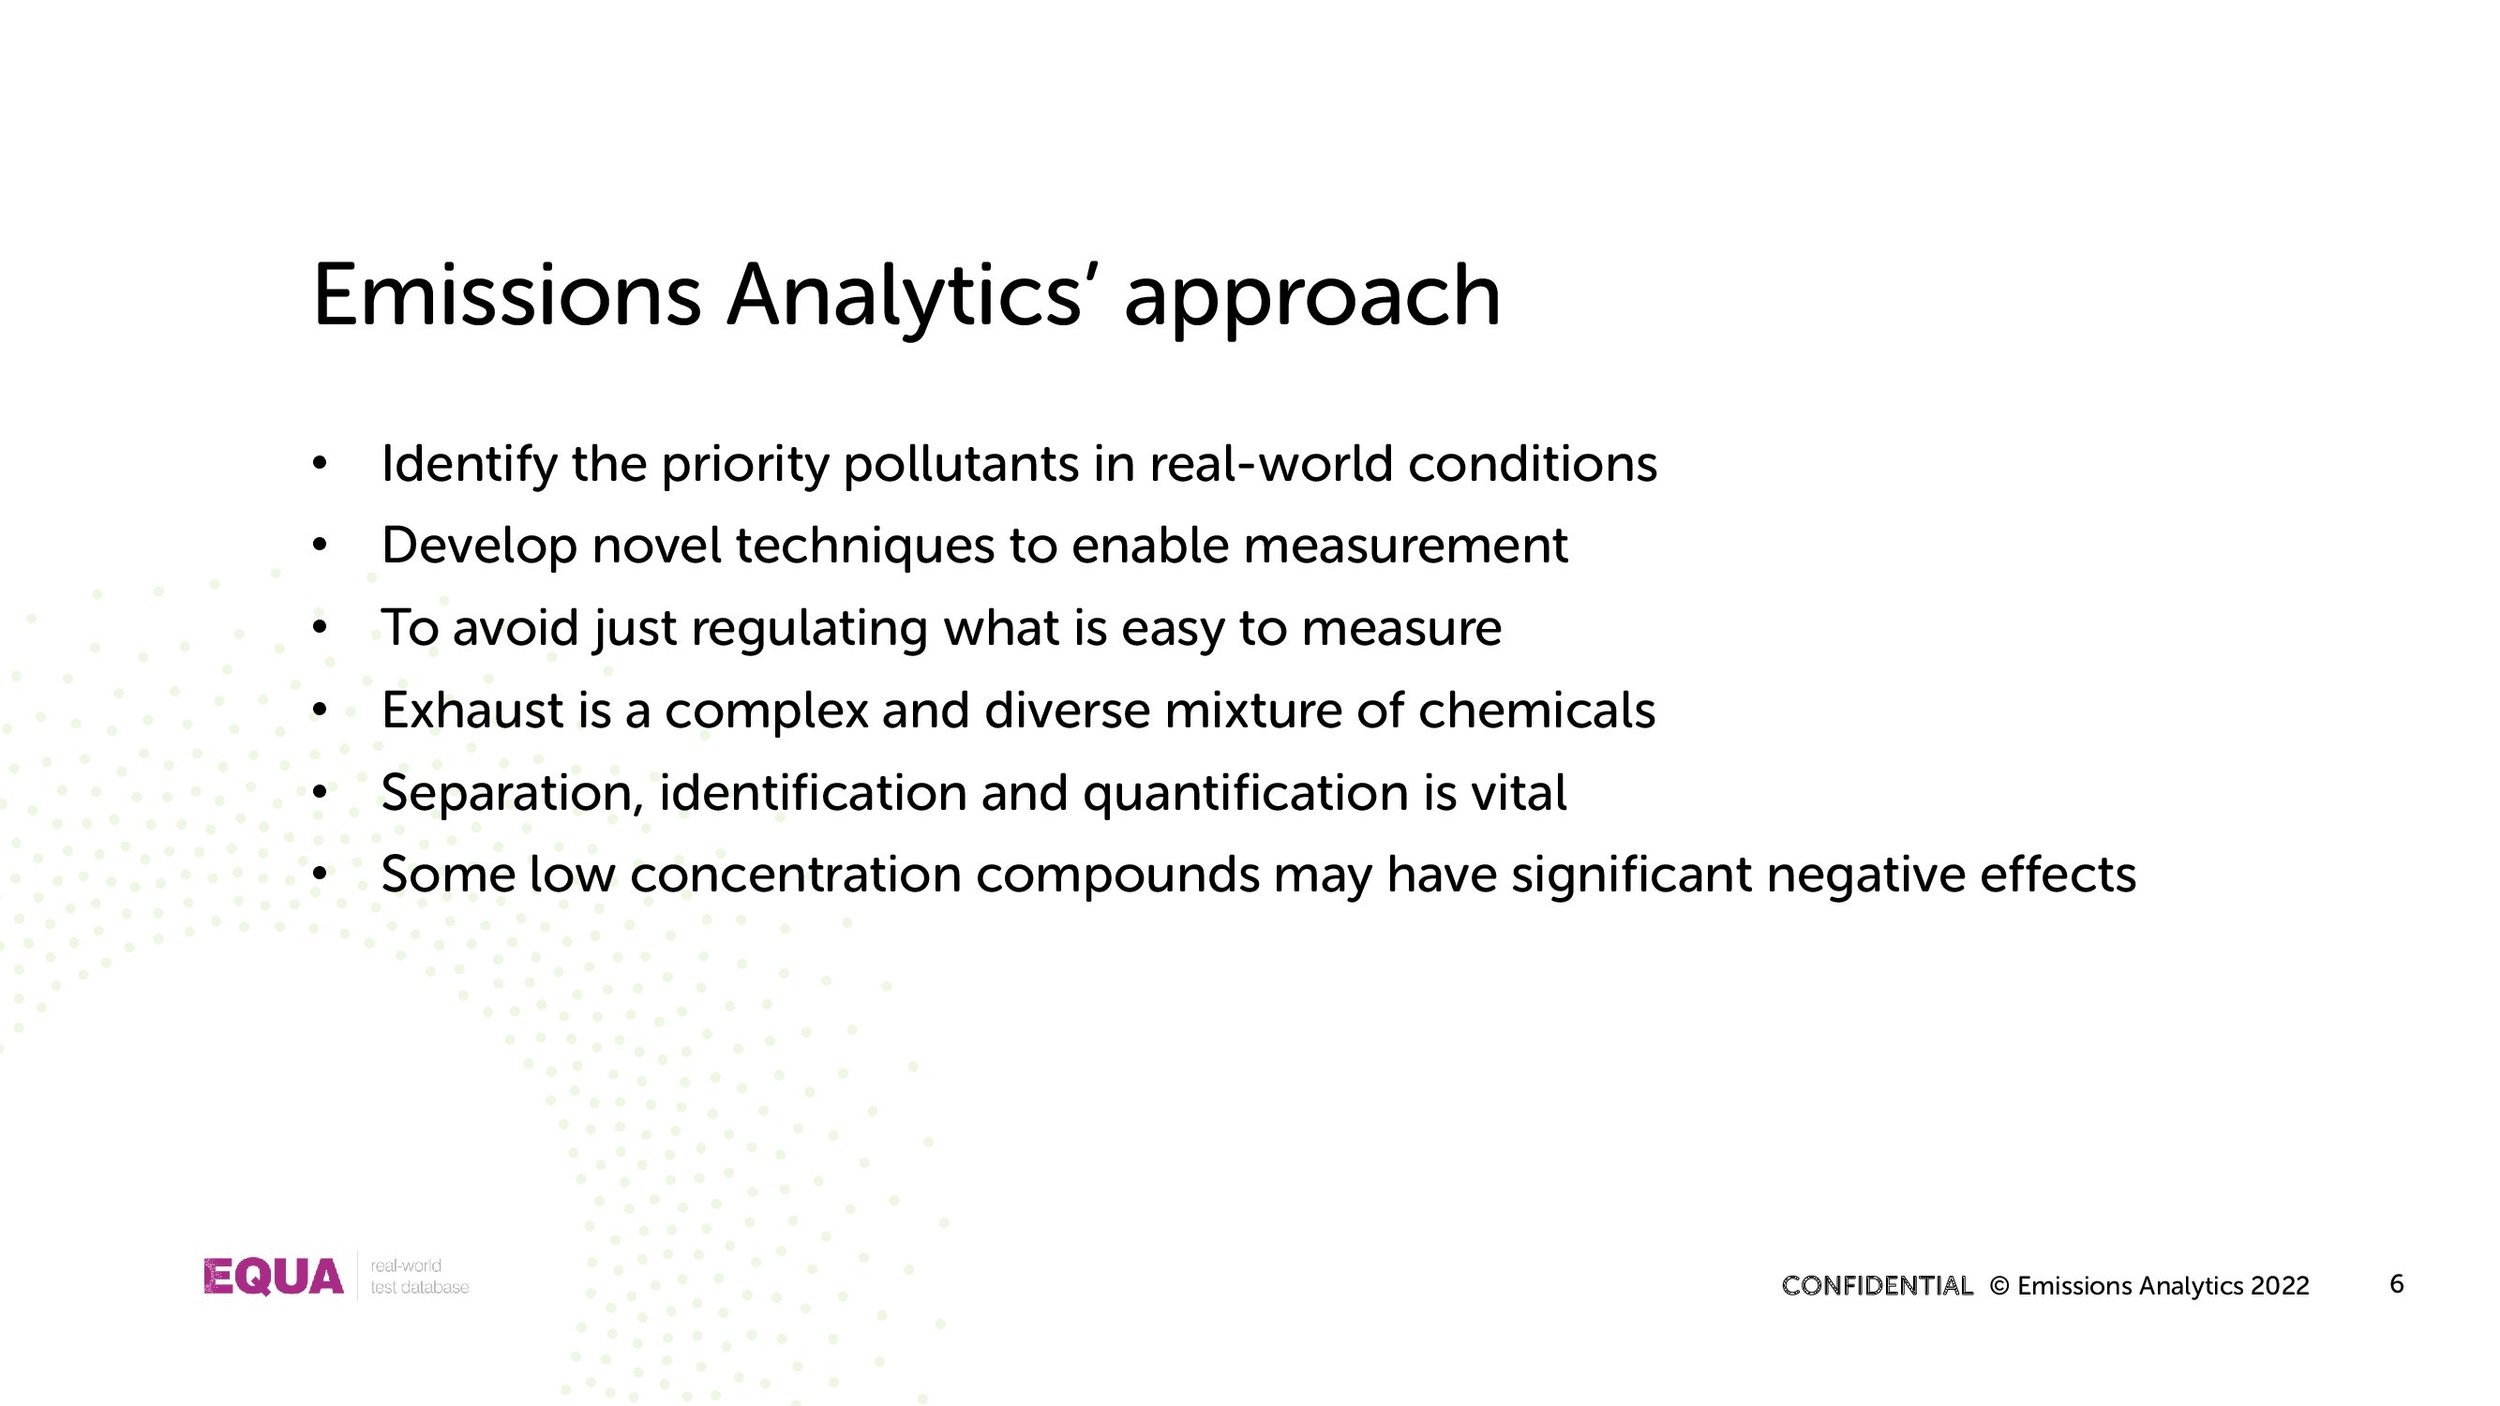 Emissions Analytics UCR presentation 17 March 2022_00006.jpg